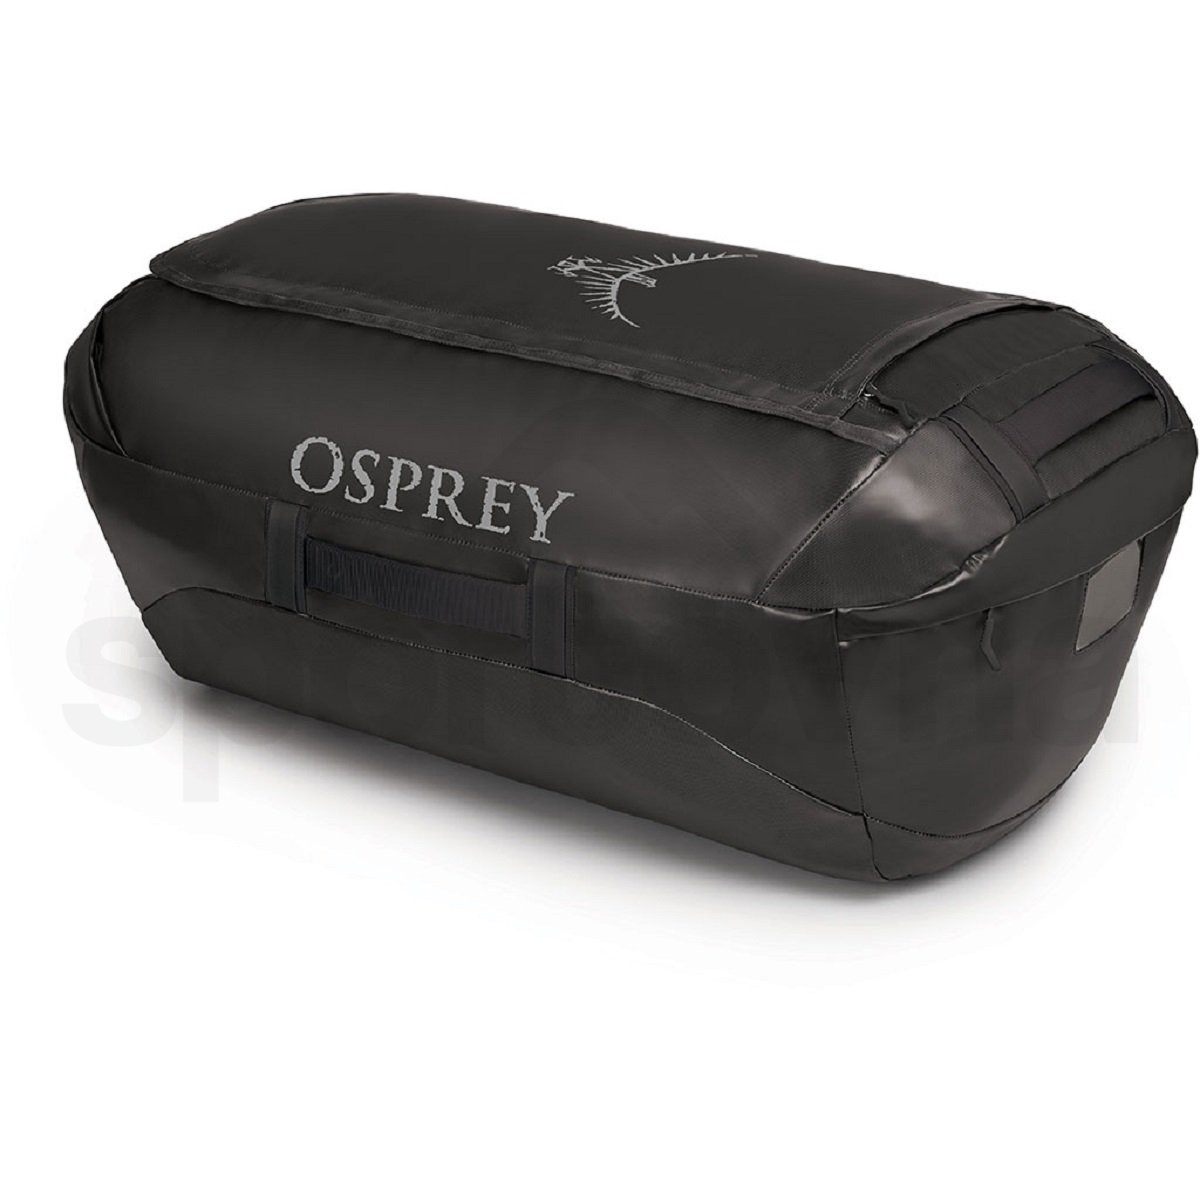 Osprey_Transporter_120_10016563OSP